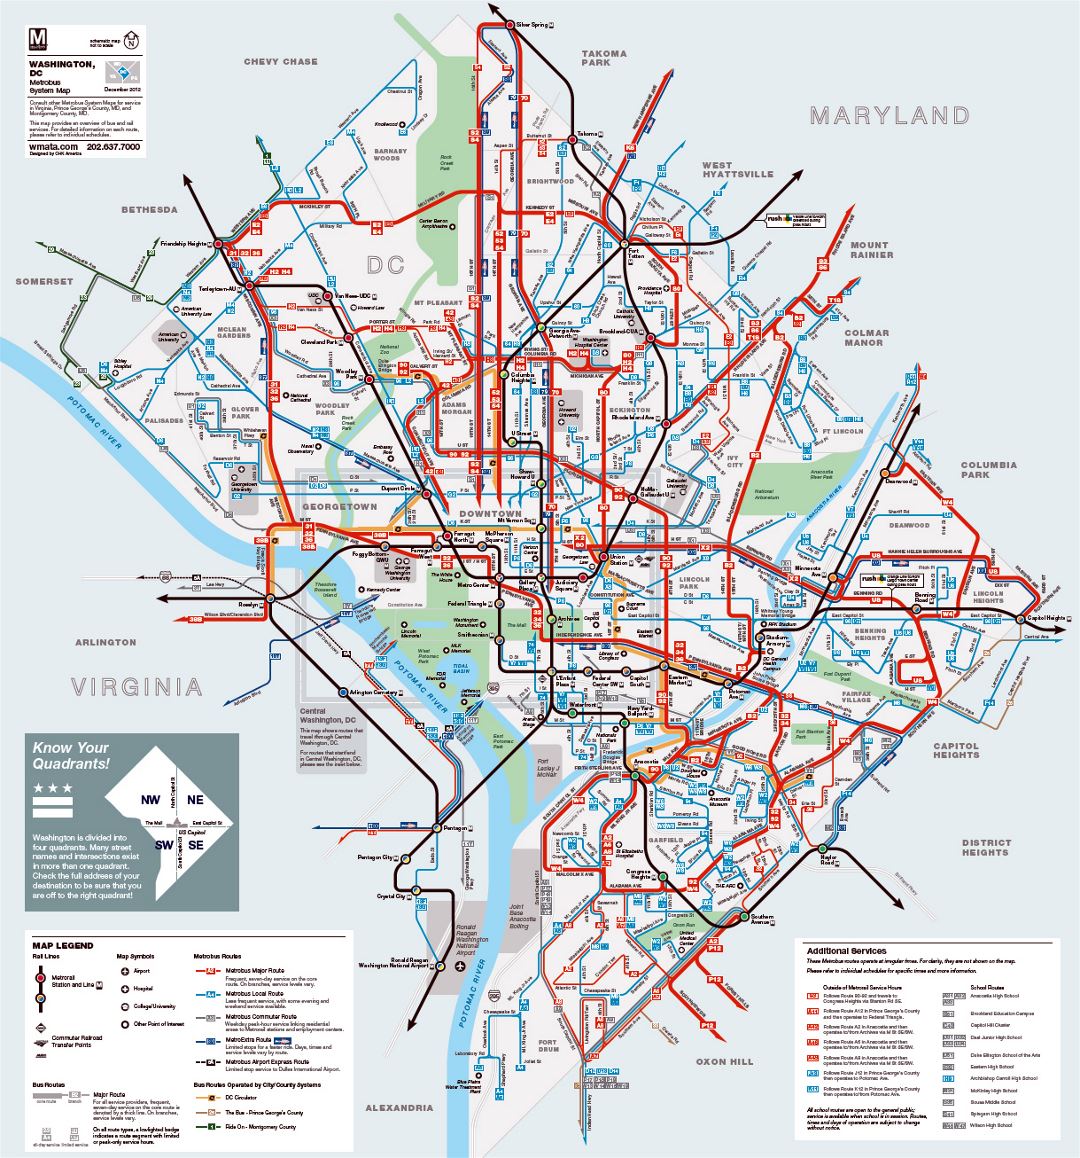 Detailed metrobus route map of Washington D.C.